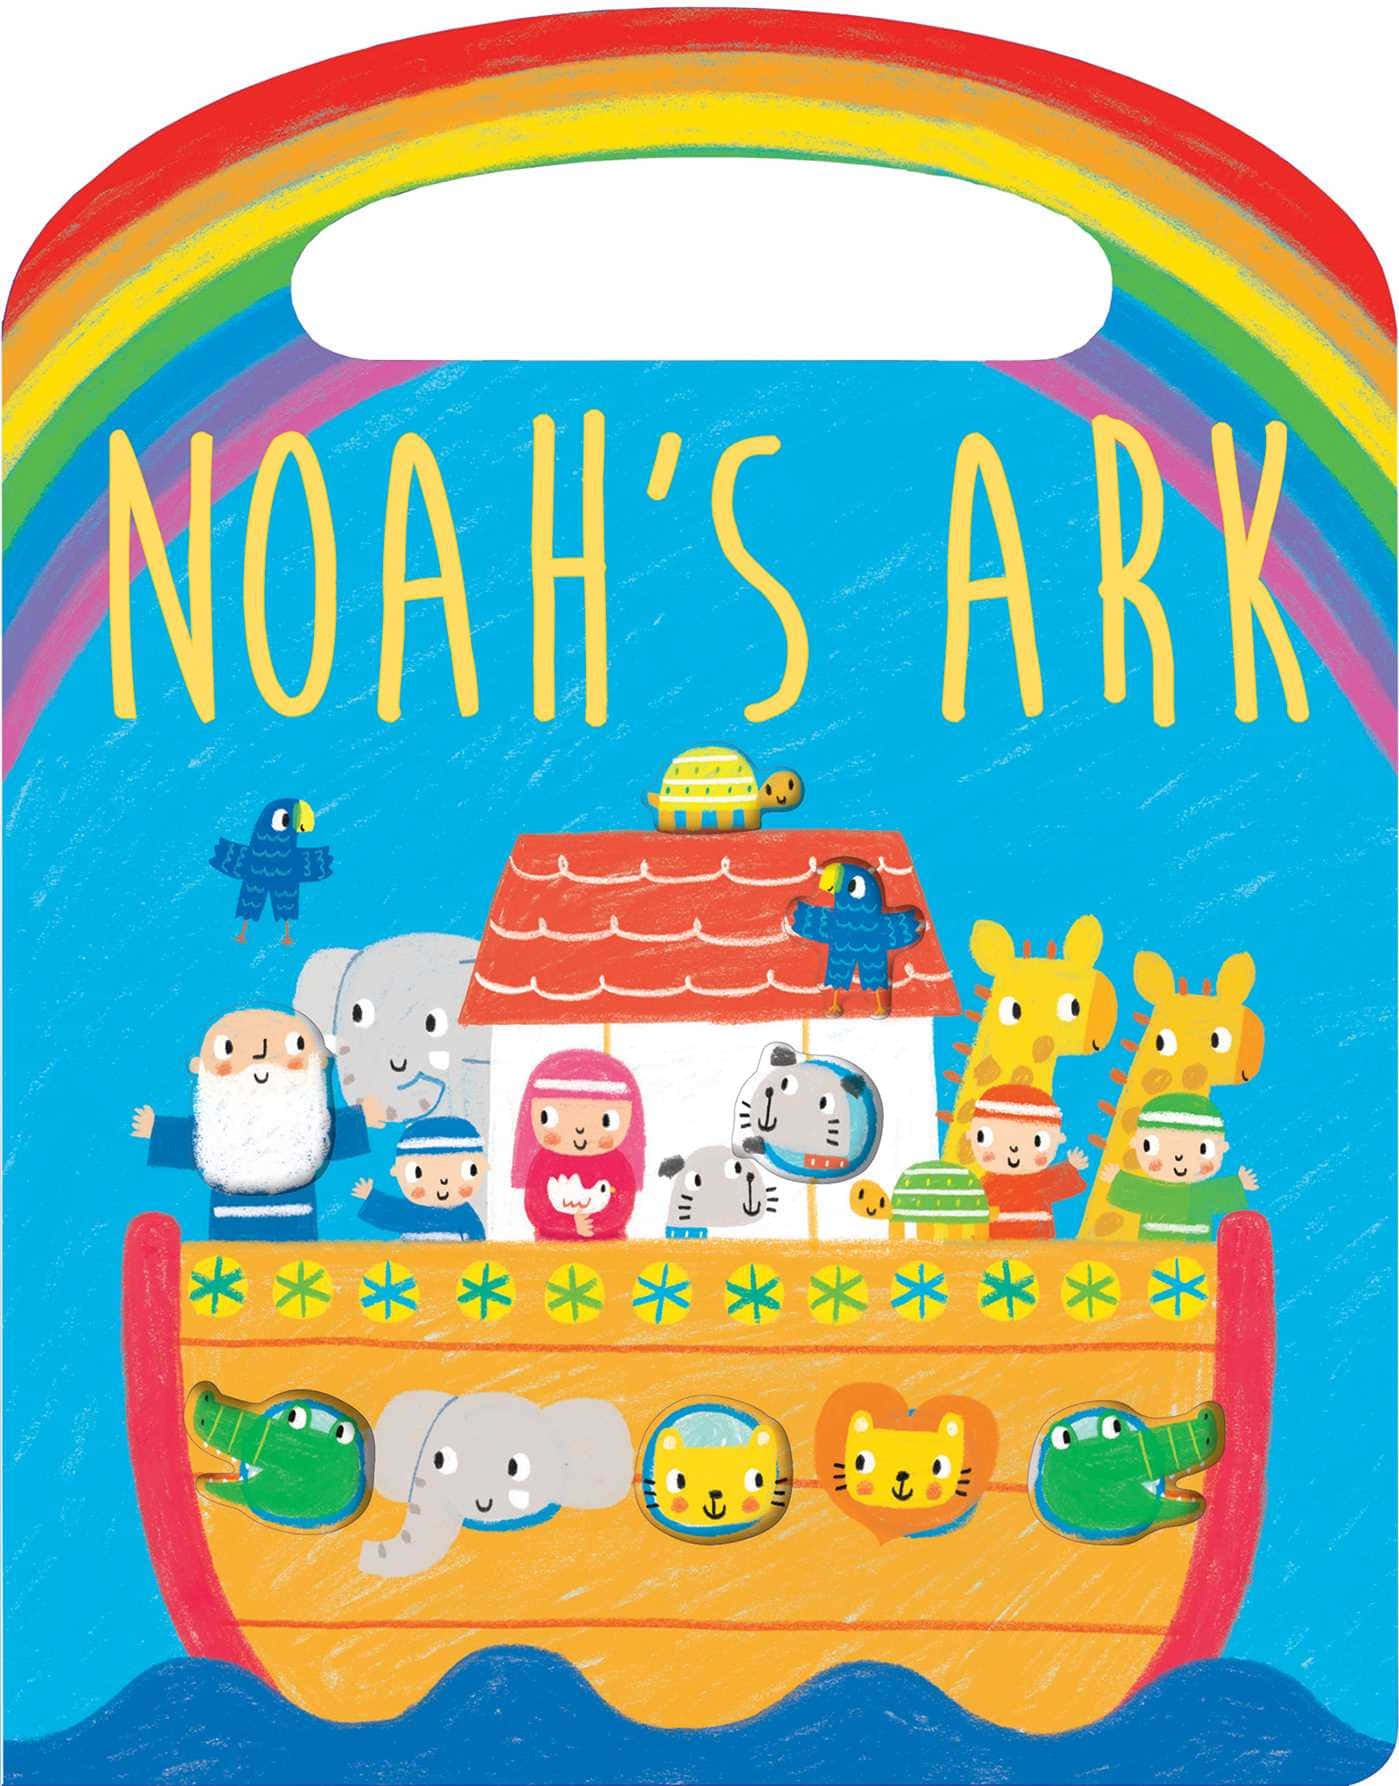 Noah's Ark By Sarah Mccarthy